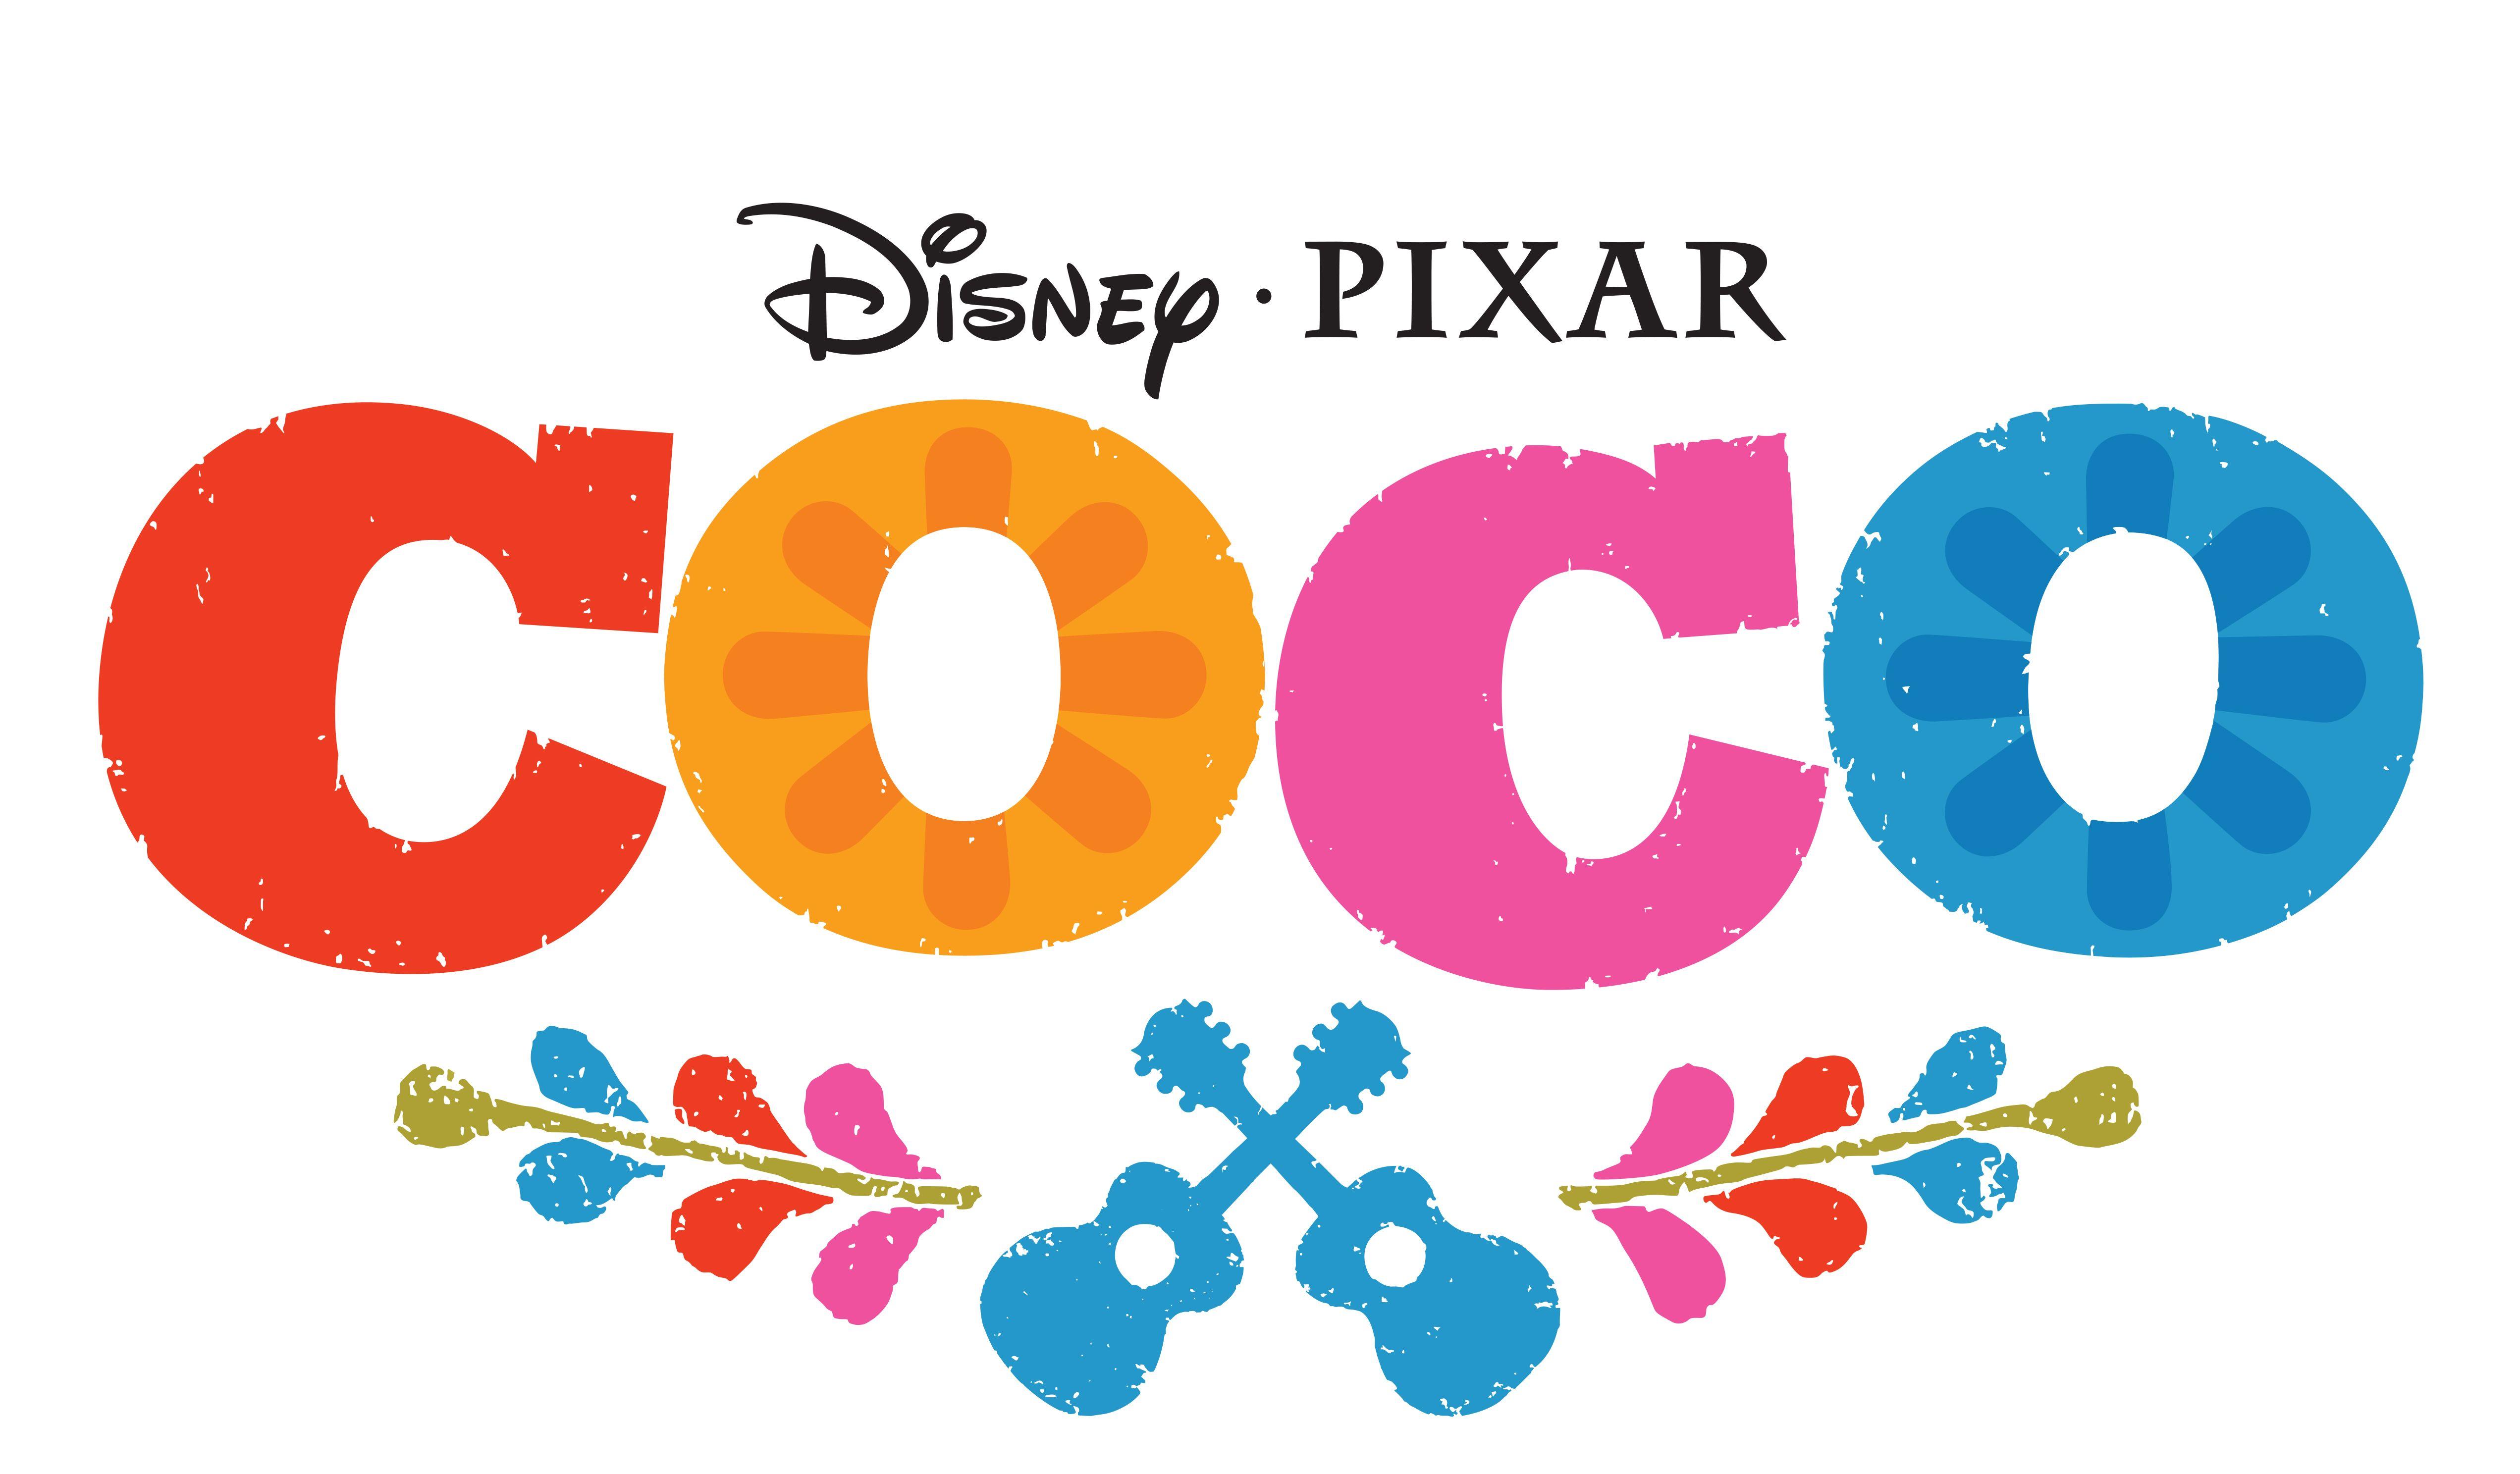 Coco Logo - Coco logo. Catrinas. New disney movies, Pixar movies, Upcoming